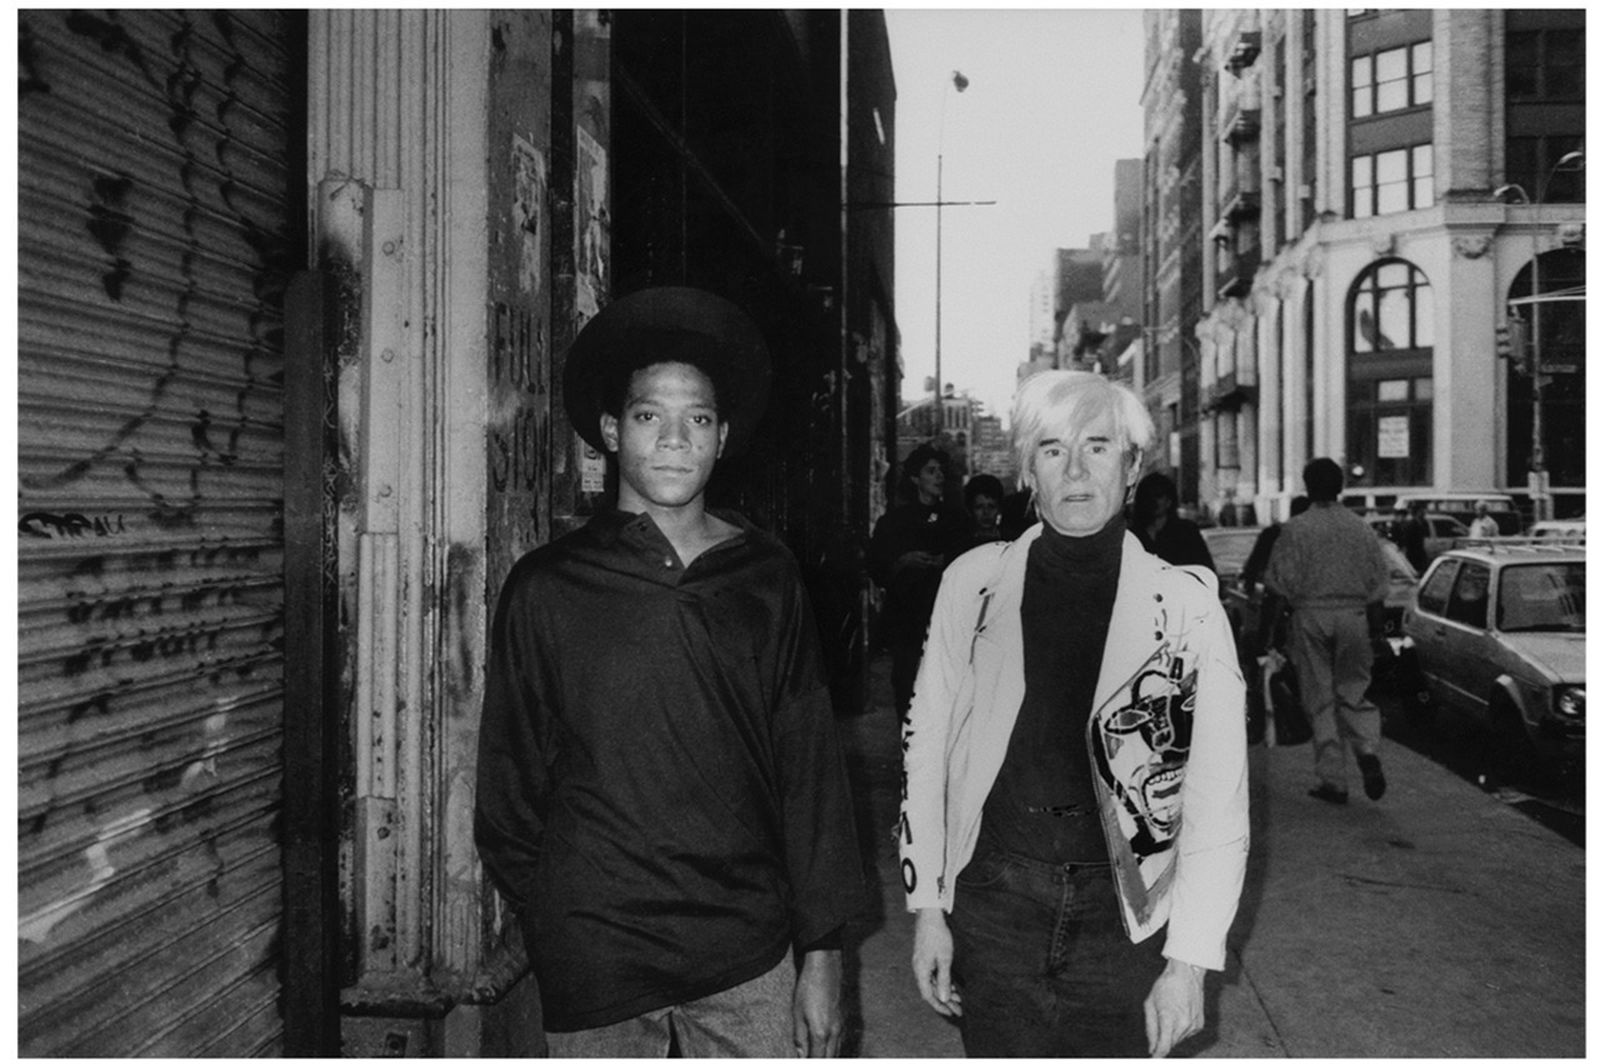 Basquiat with Warhol, Mercer St. NYC, 1985